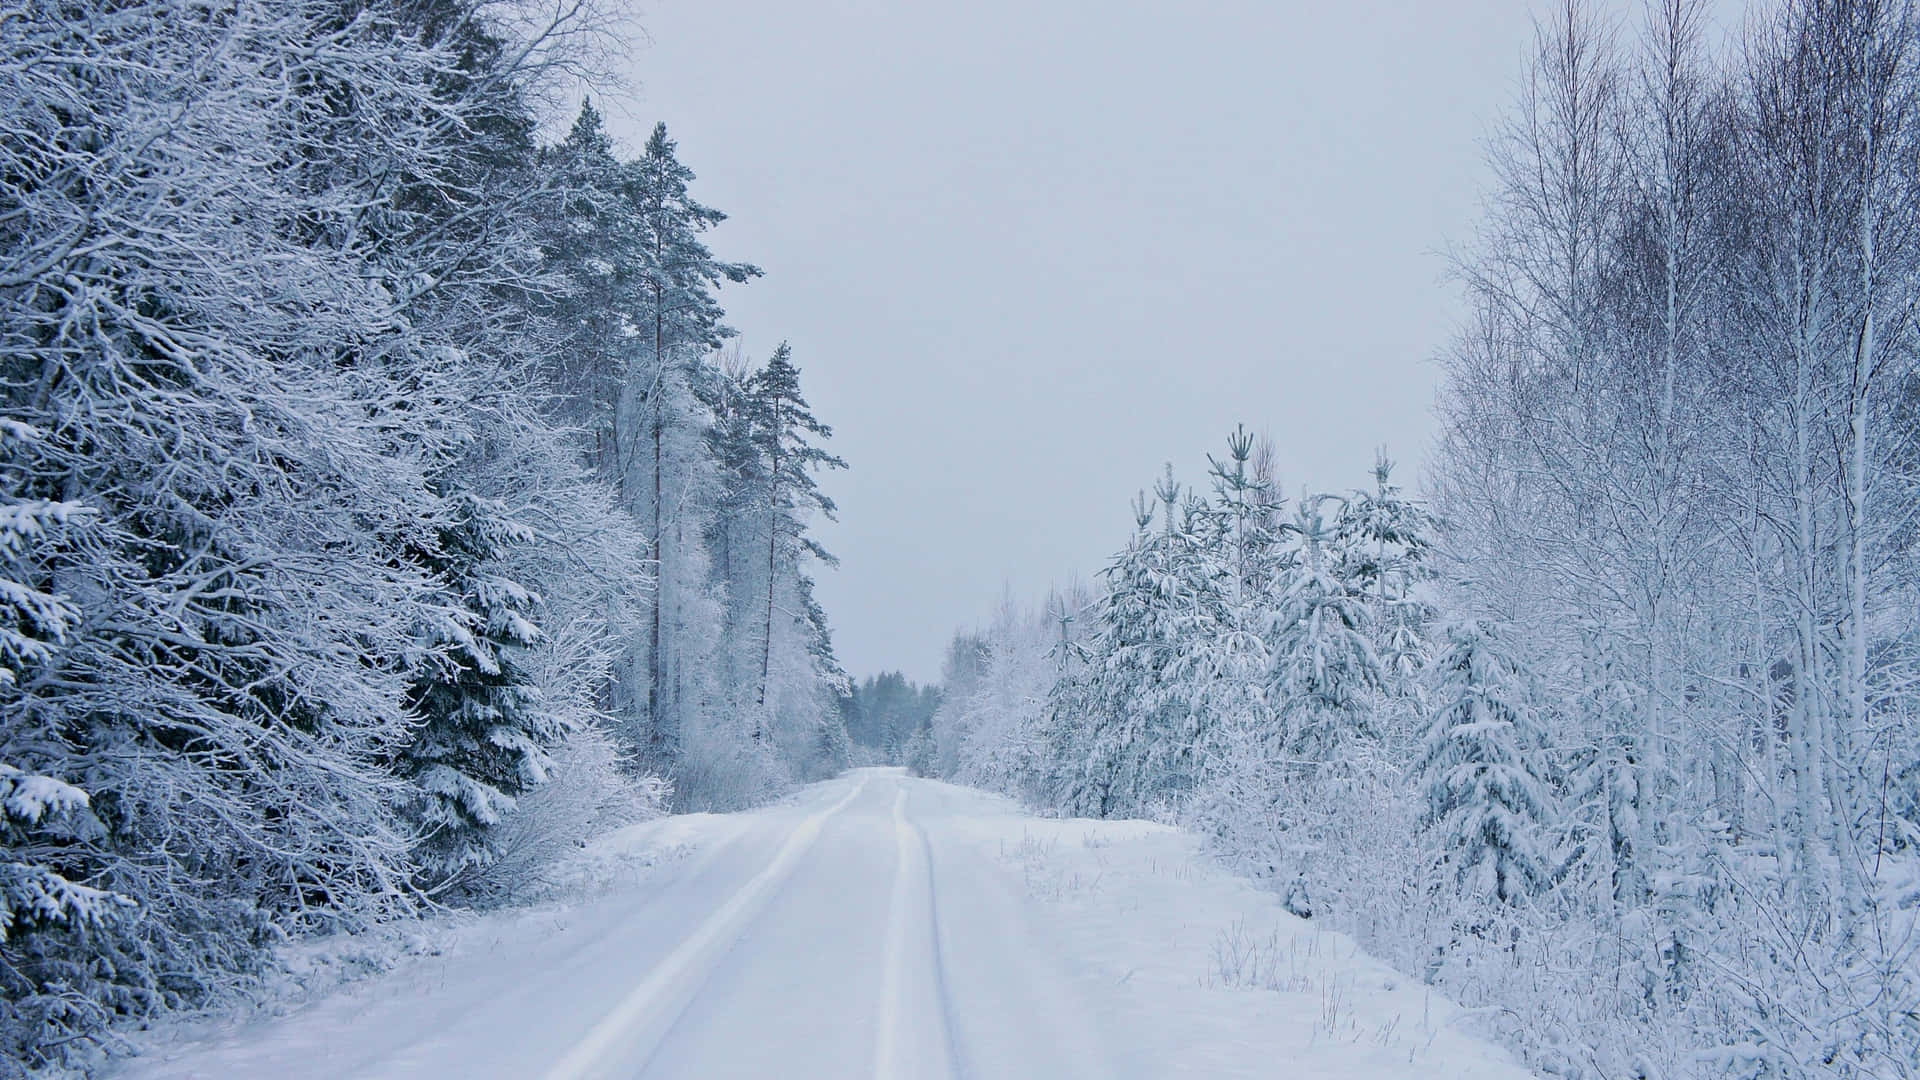 Scenic Winter Drive on a Snowy Road Wallpaper